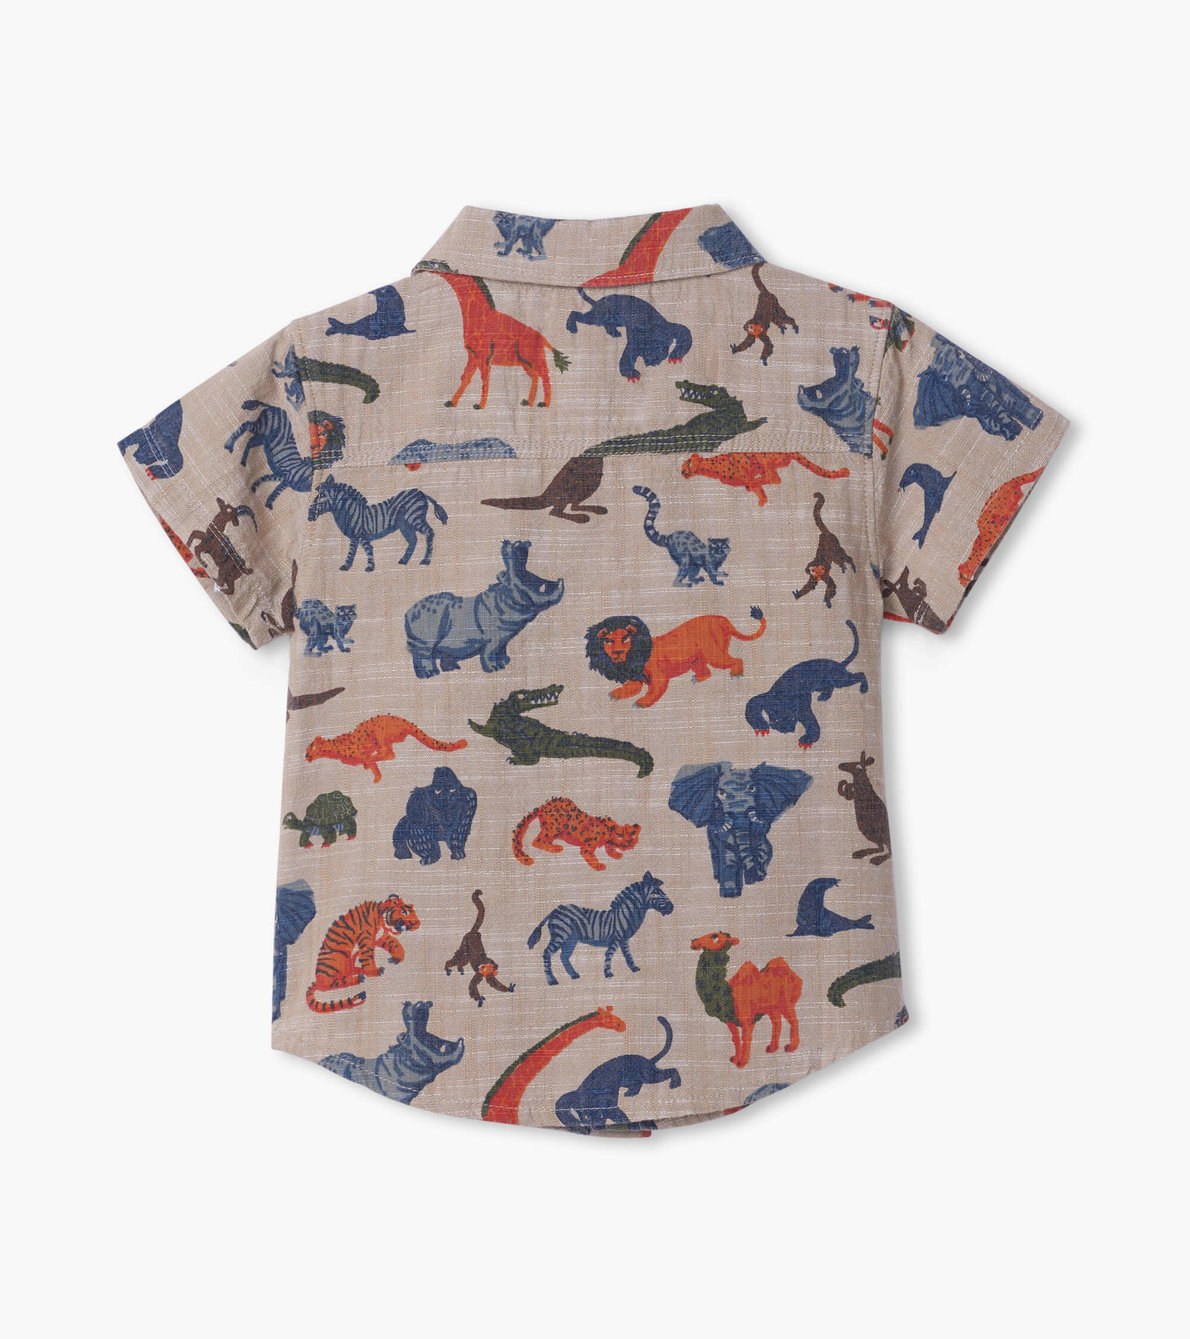 View larger image of Jungle Safari Baby Button Down Shirt